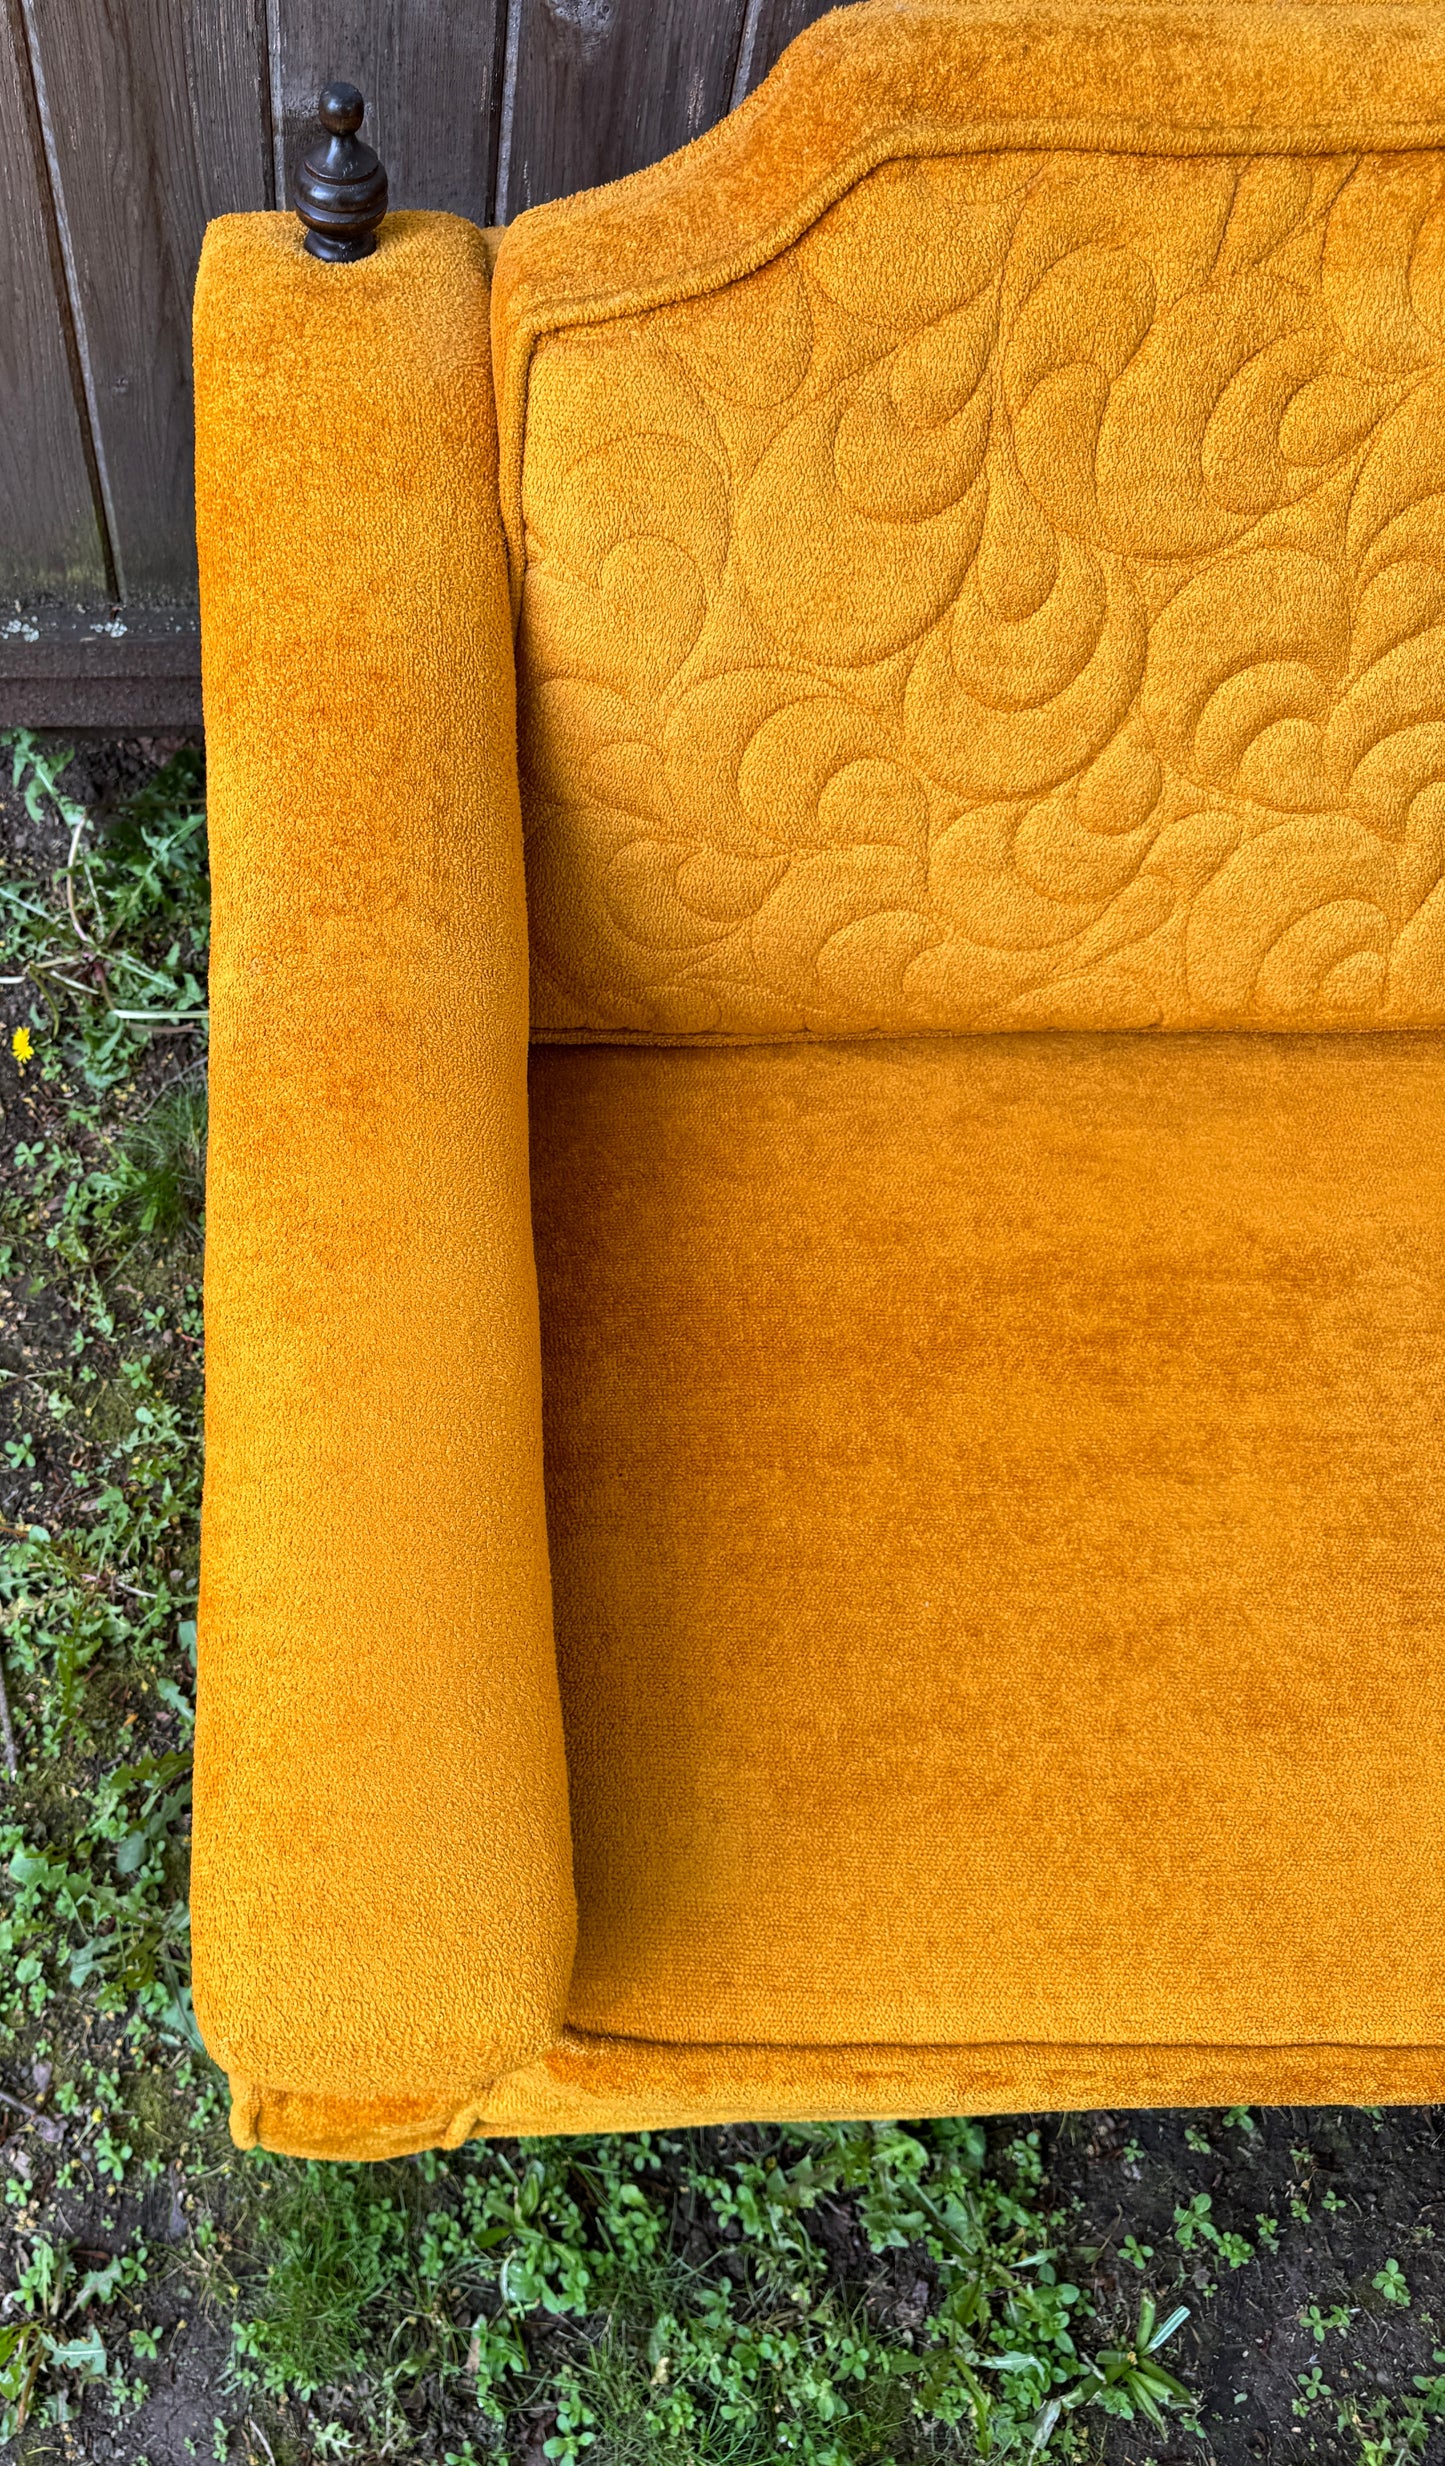 The Golden Sun Sofa Set